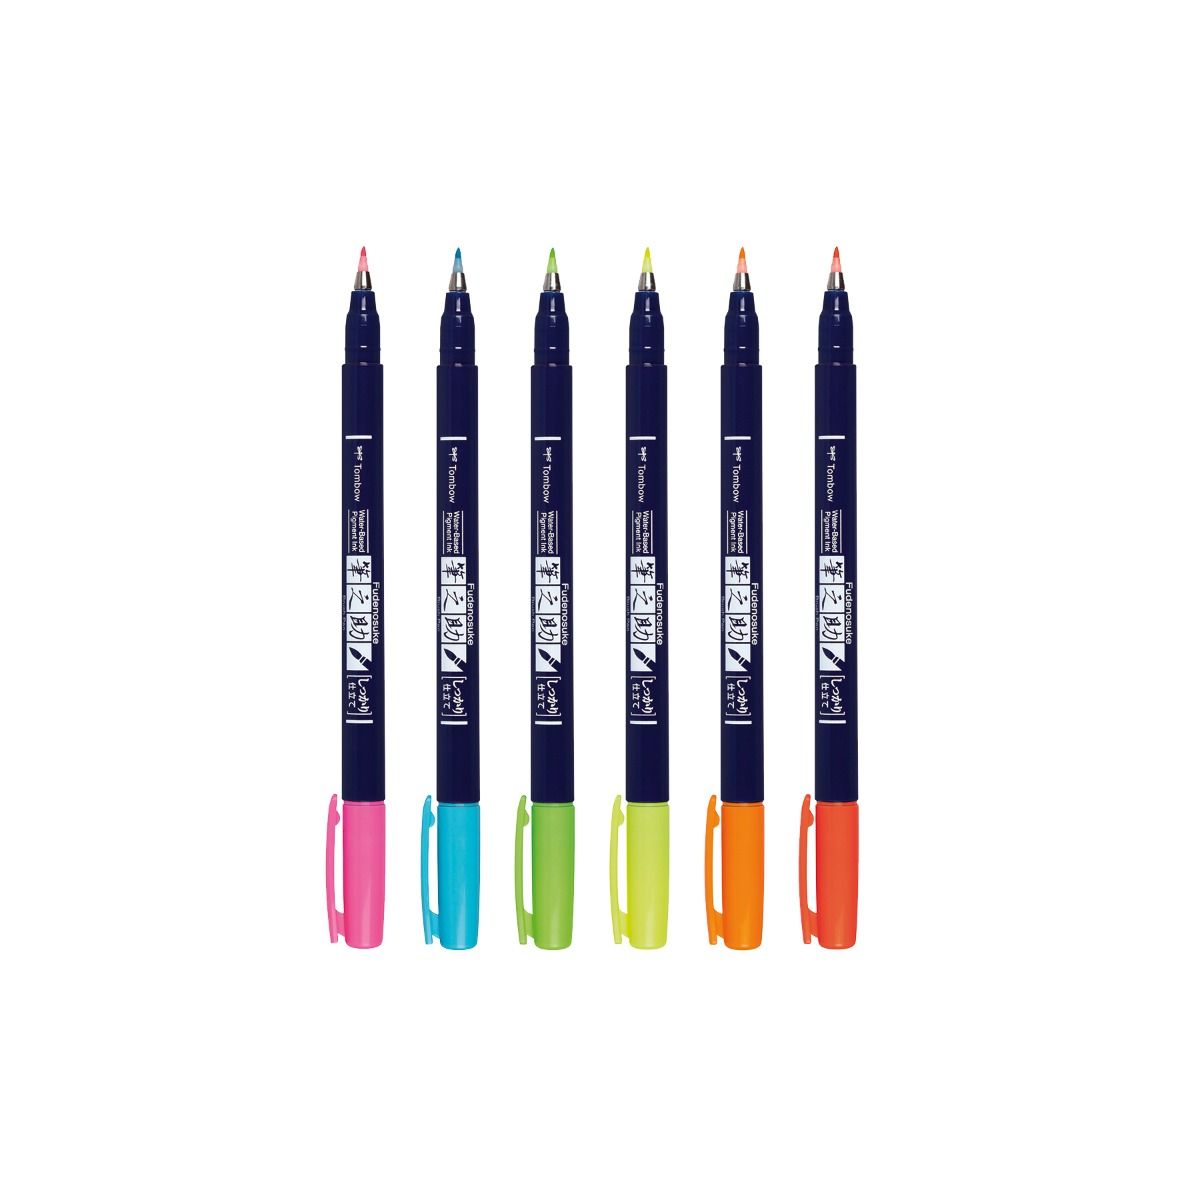 TOMBOW Fudenosuke Brush Pen-Hard-Neon Orange